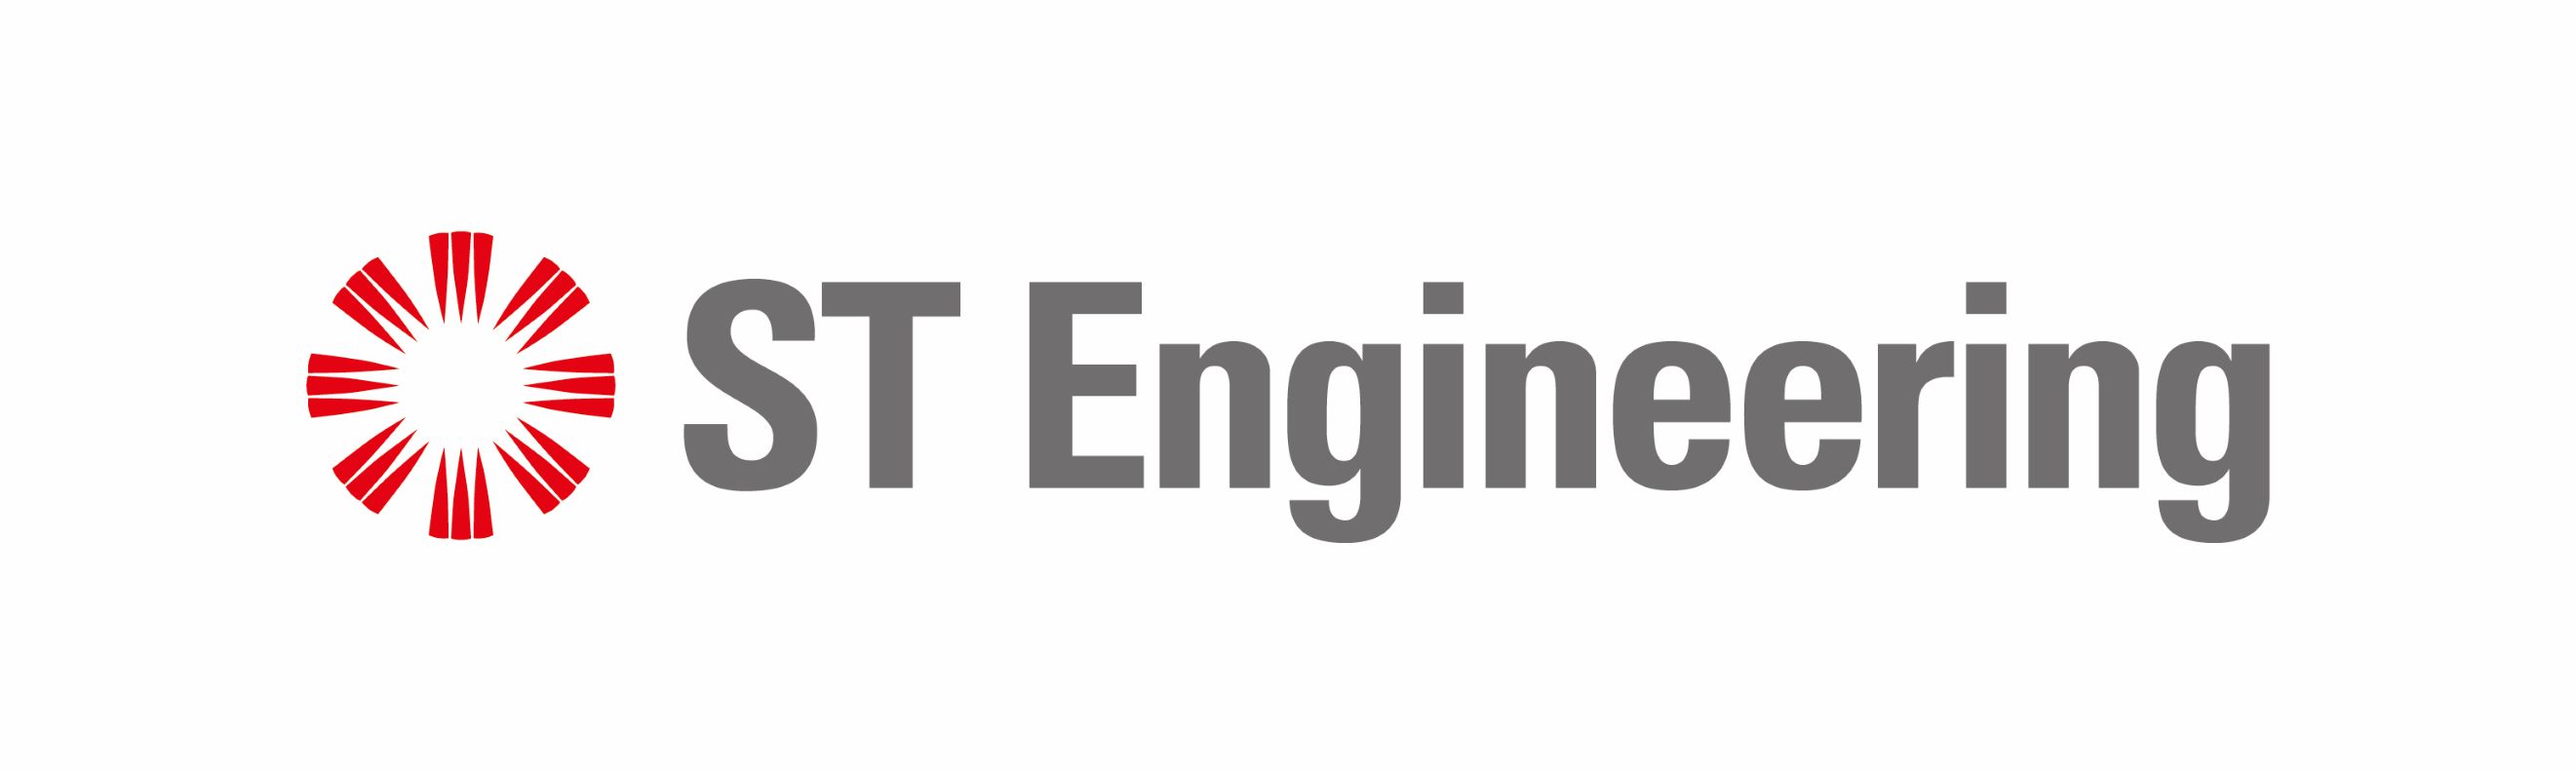 St Engineering Land Systems Ltd. logo